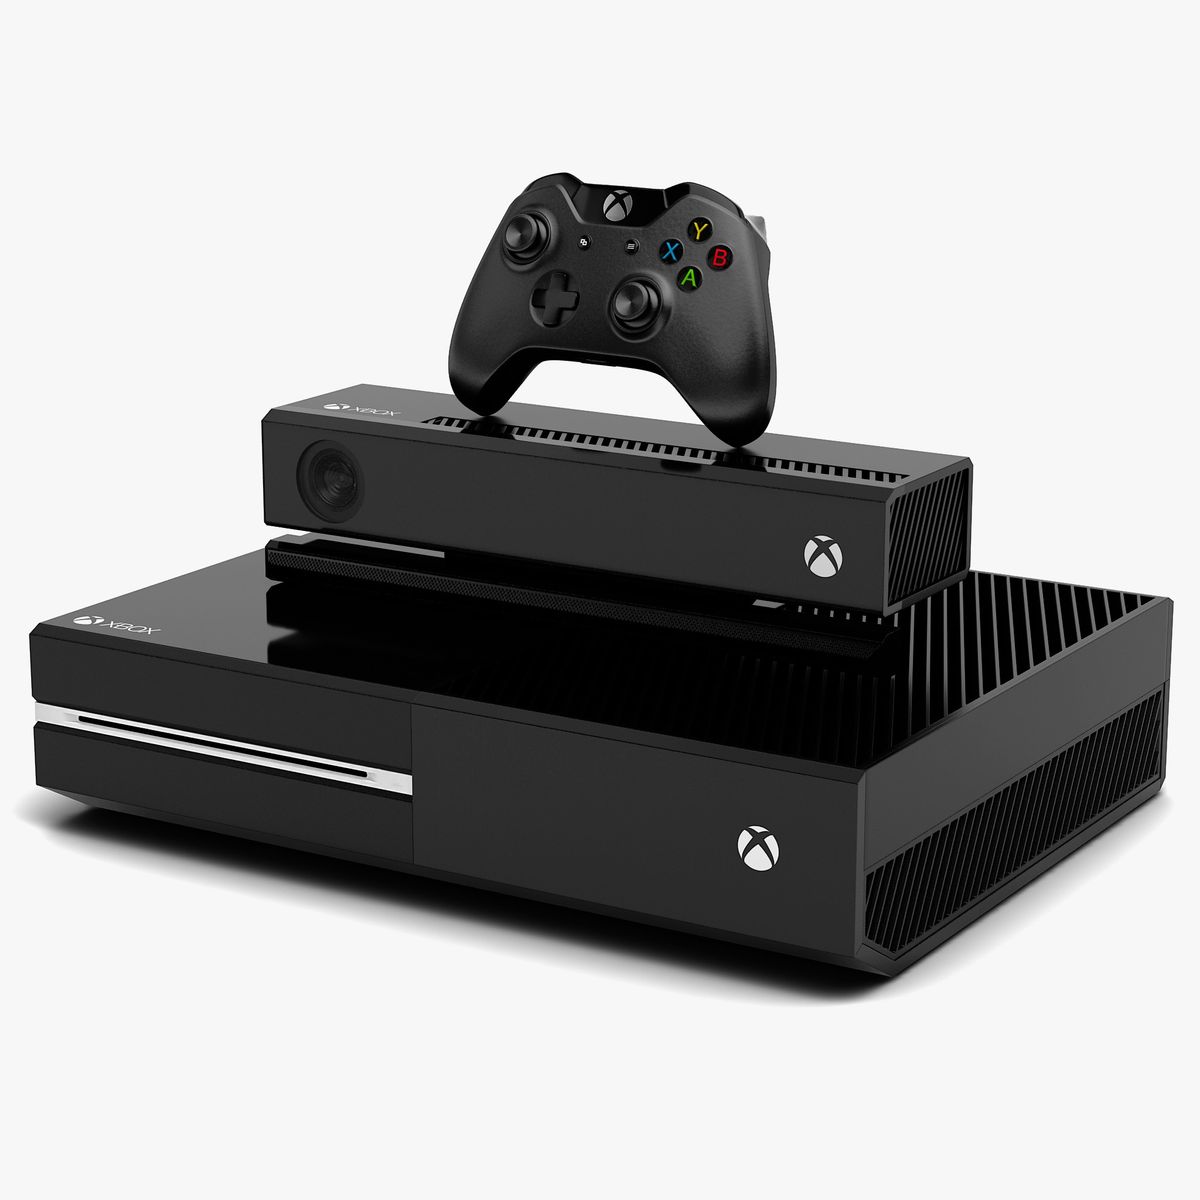 Shiny New Updates To Xbox One